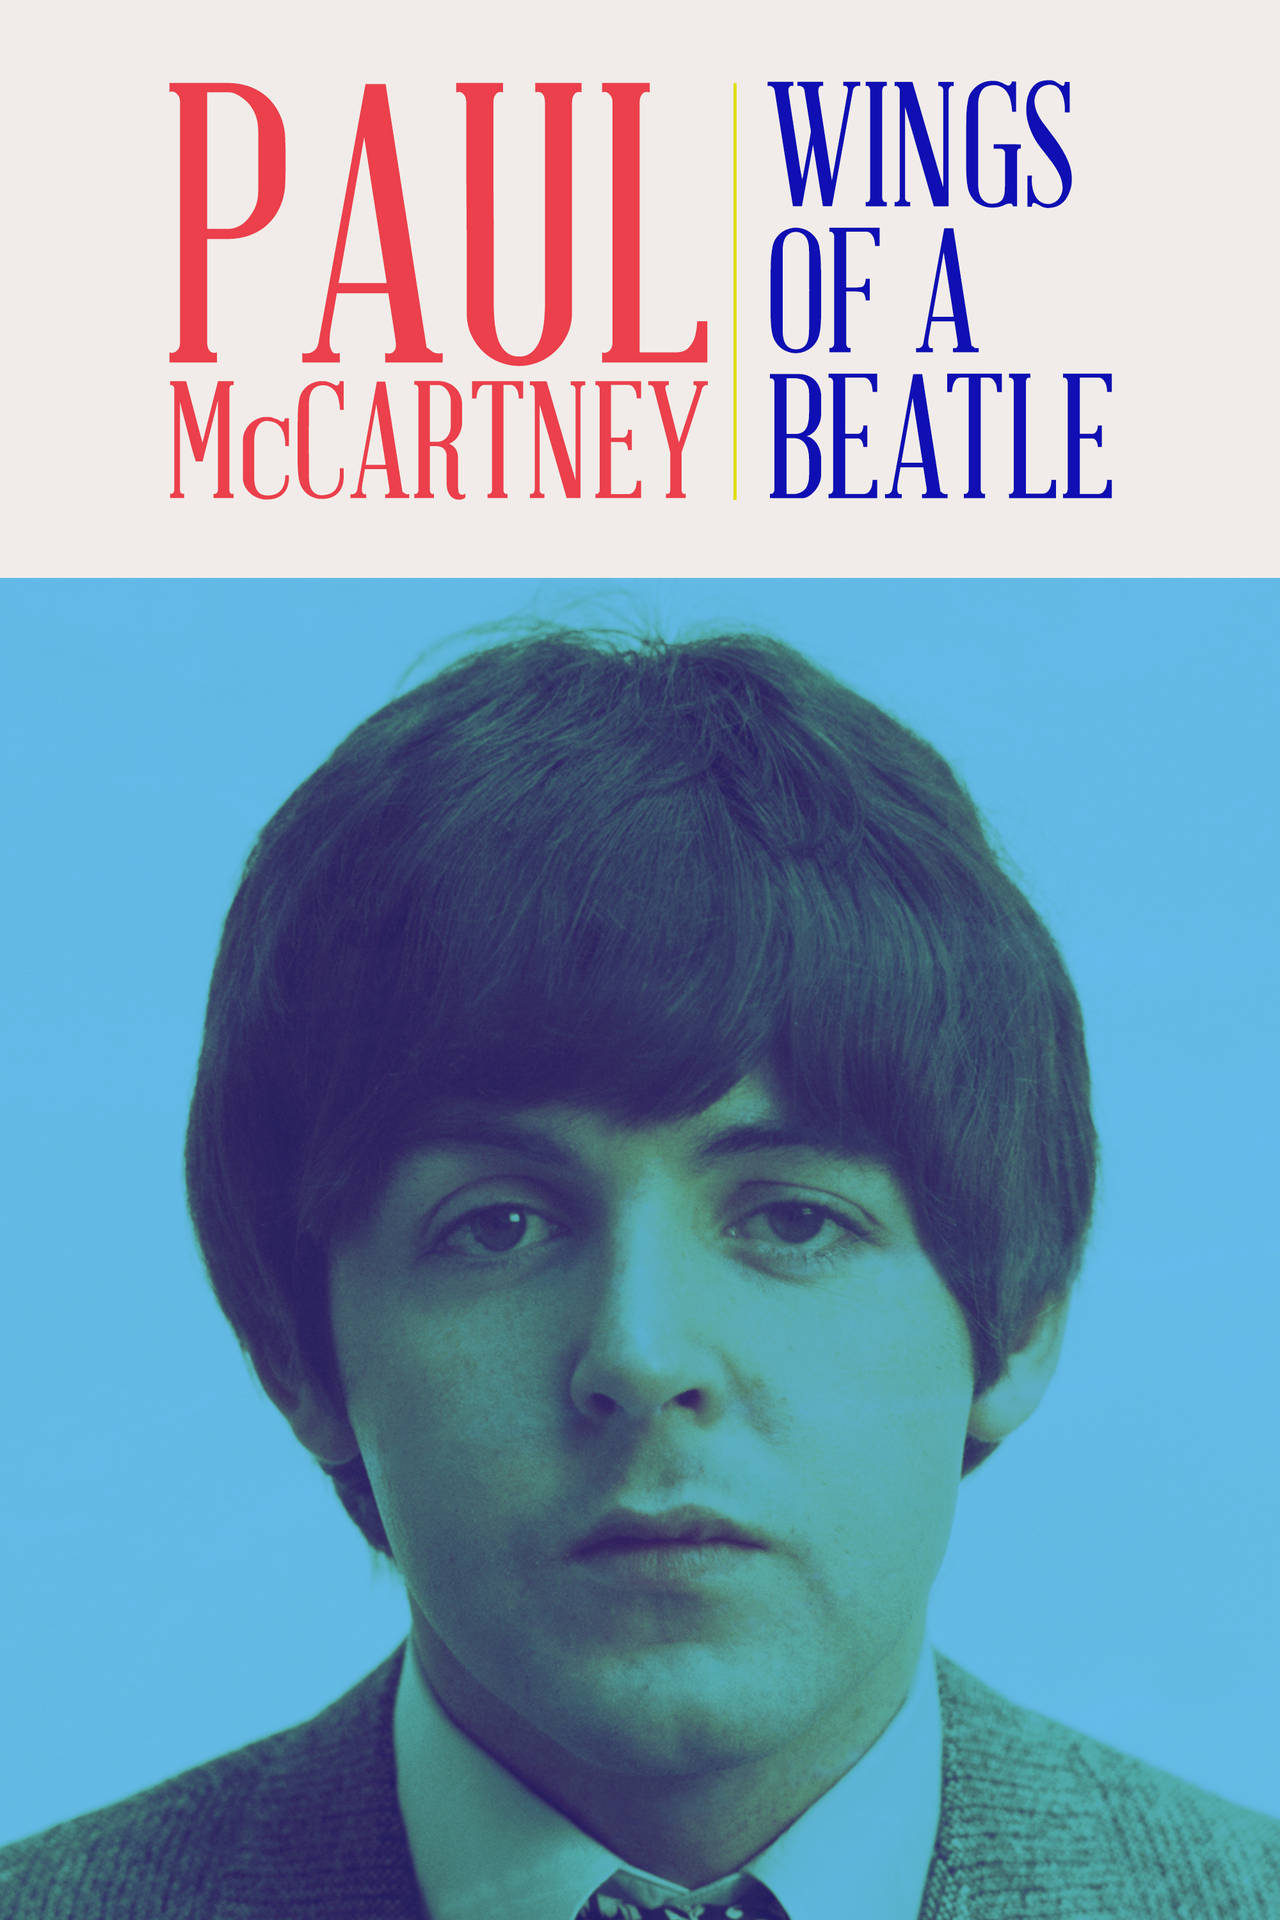 Paul McCartney And Wings Documentary Movie Wallpaper